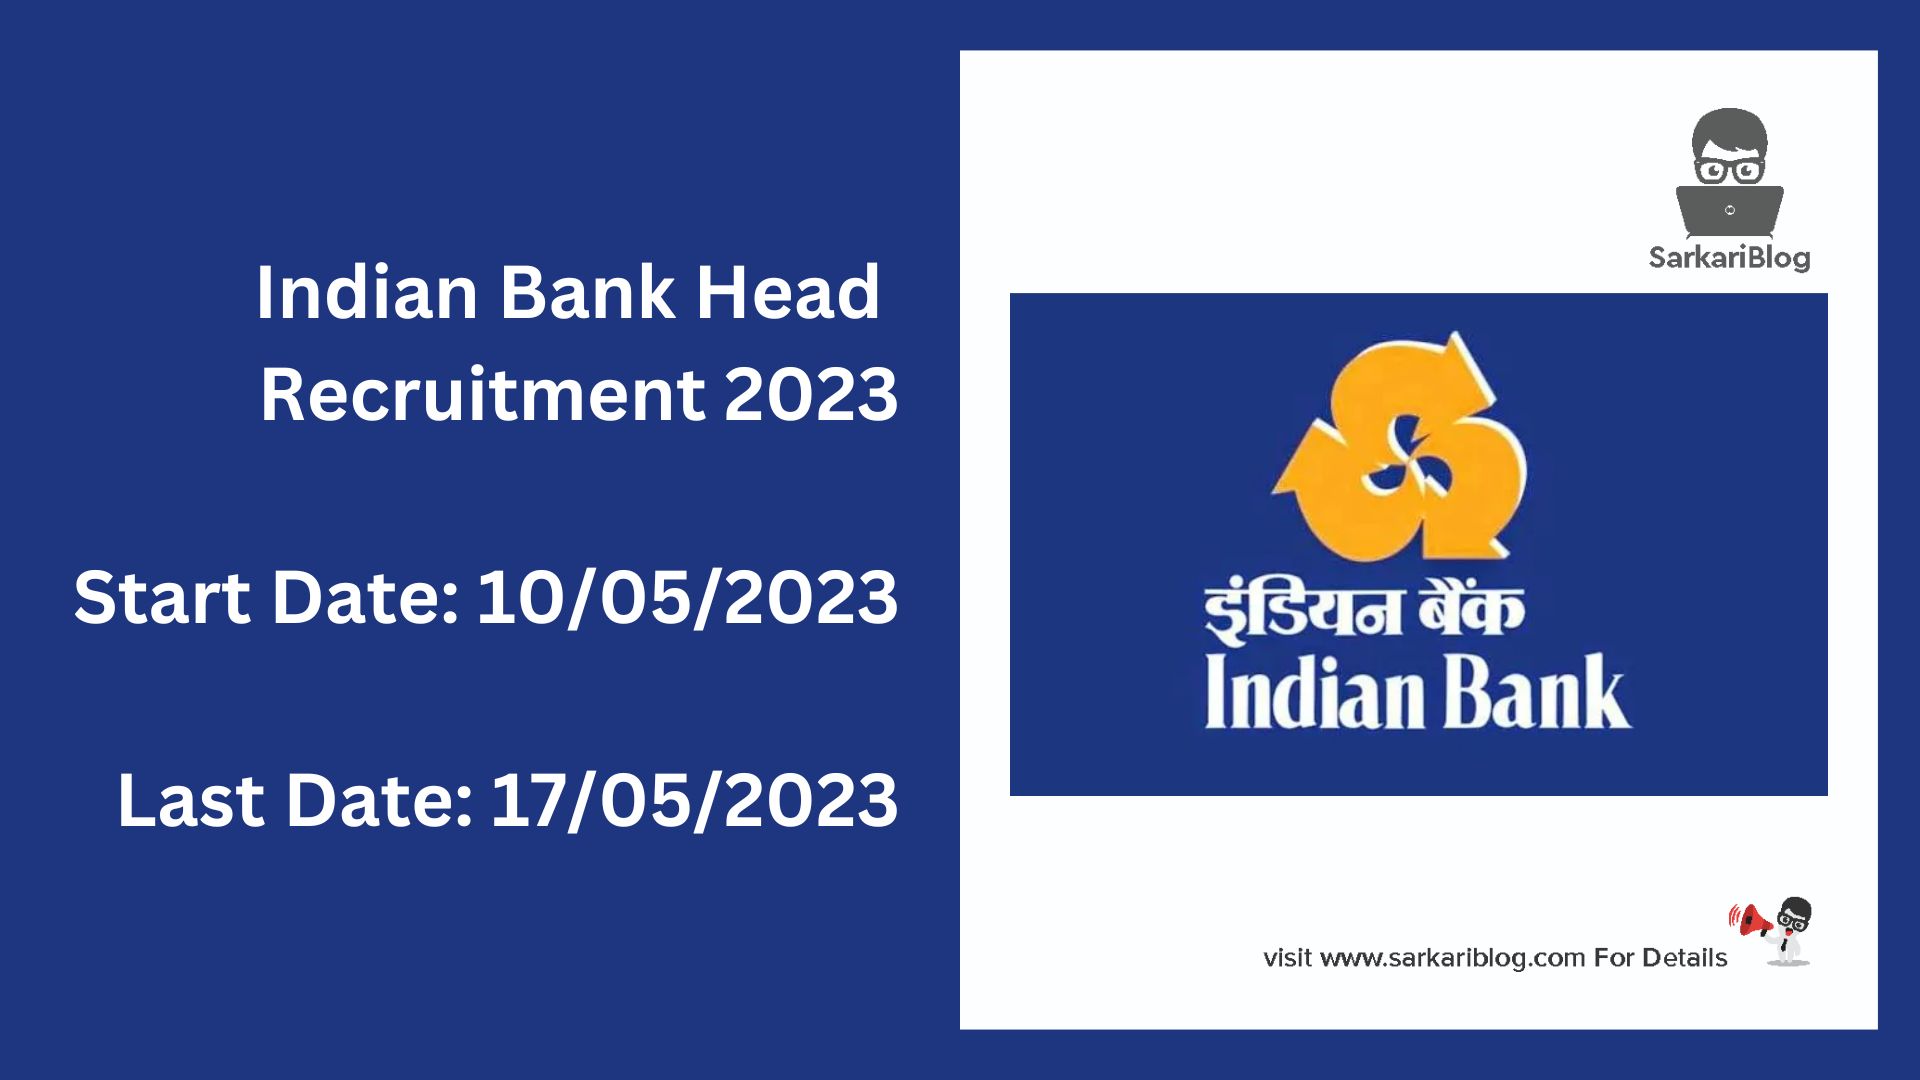 Indian Bank Head Recruitment 2023